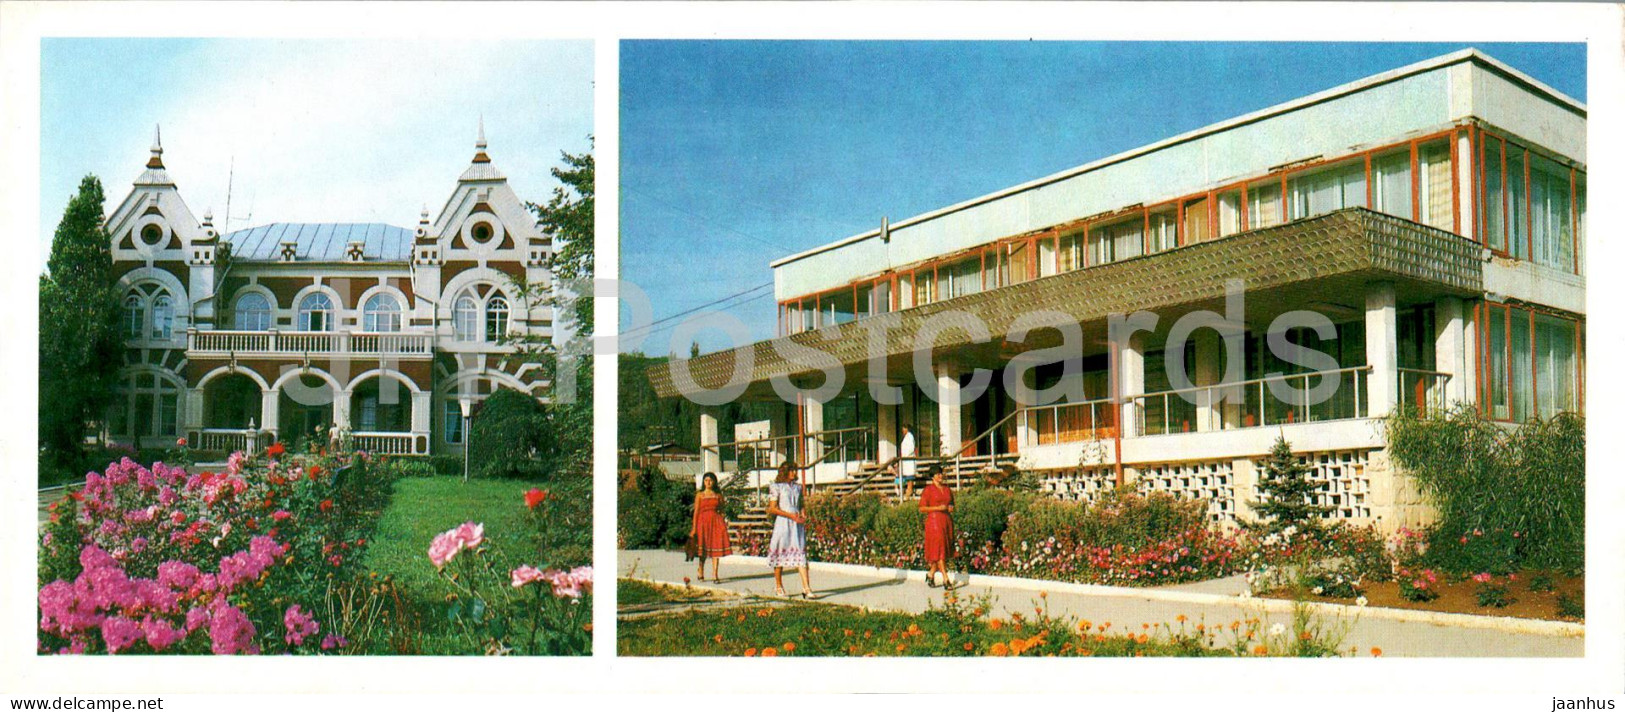 Tsaul Village - Lenin Technical School - Sanatorium Soviet Moldavia - 1985 - Moldova USSR - Unused - Moldavie